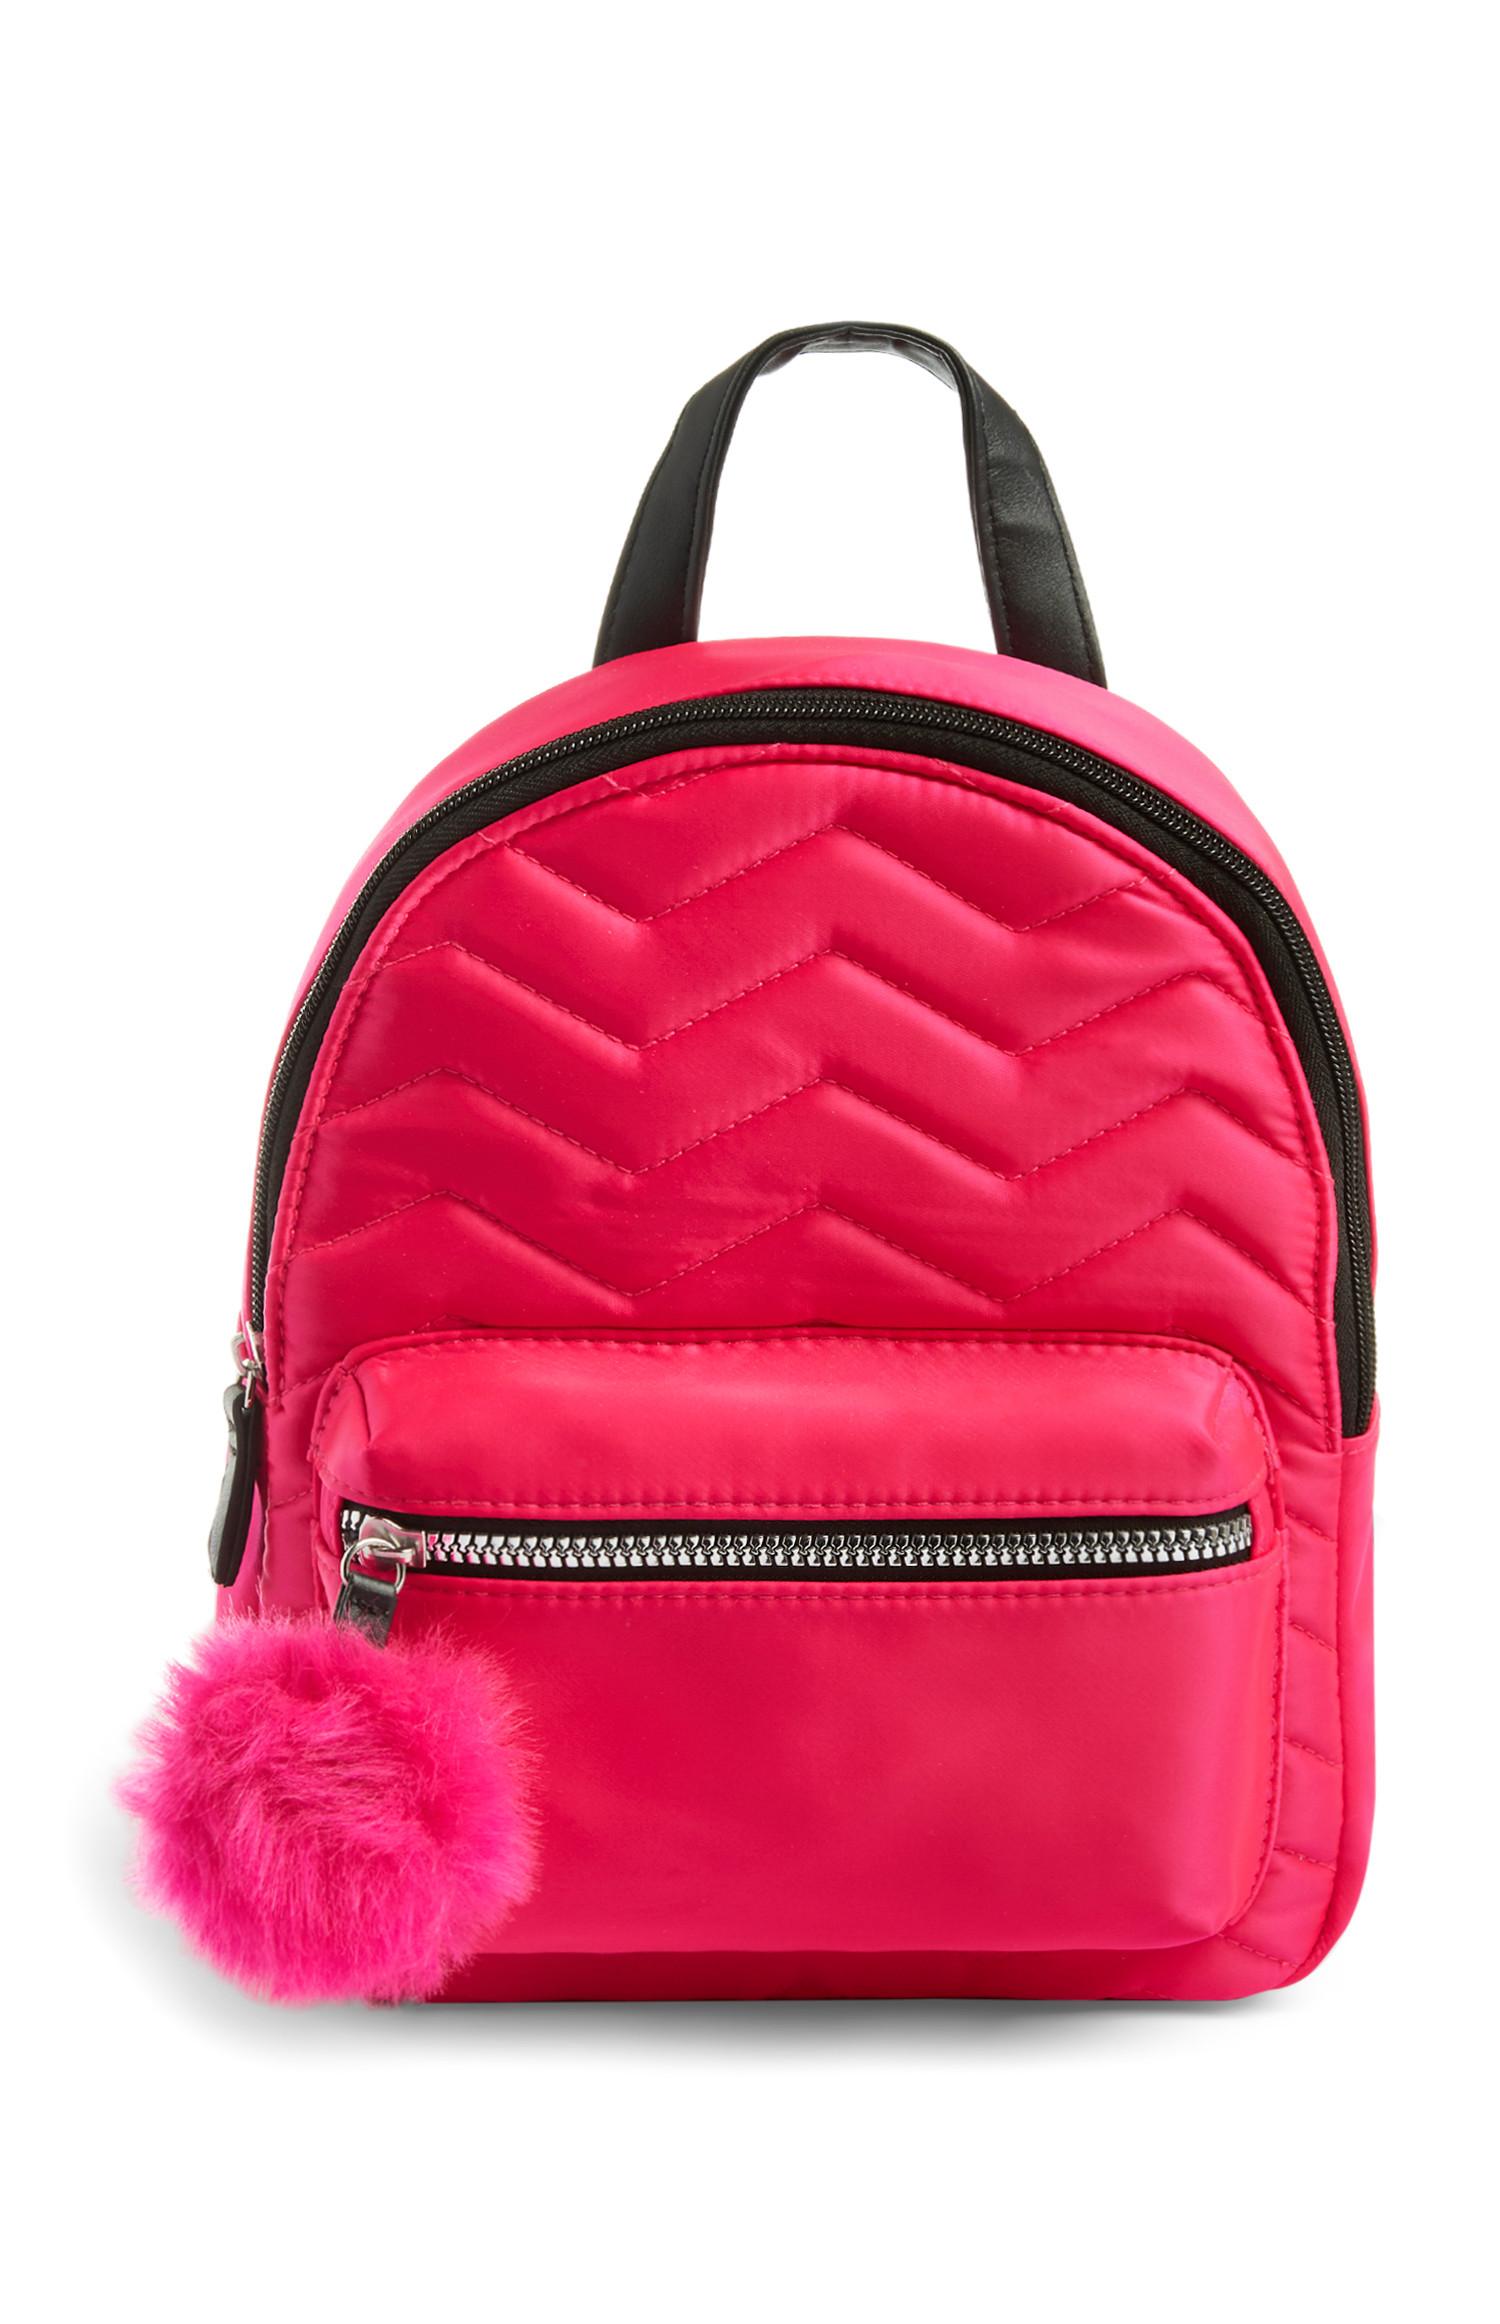 Ariana Grande Sweetener Backpack Accessories Kids